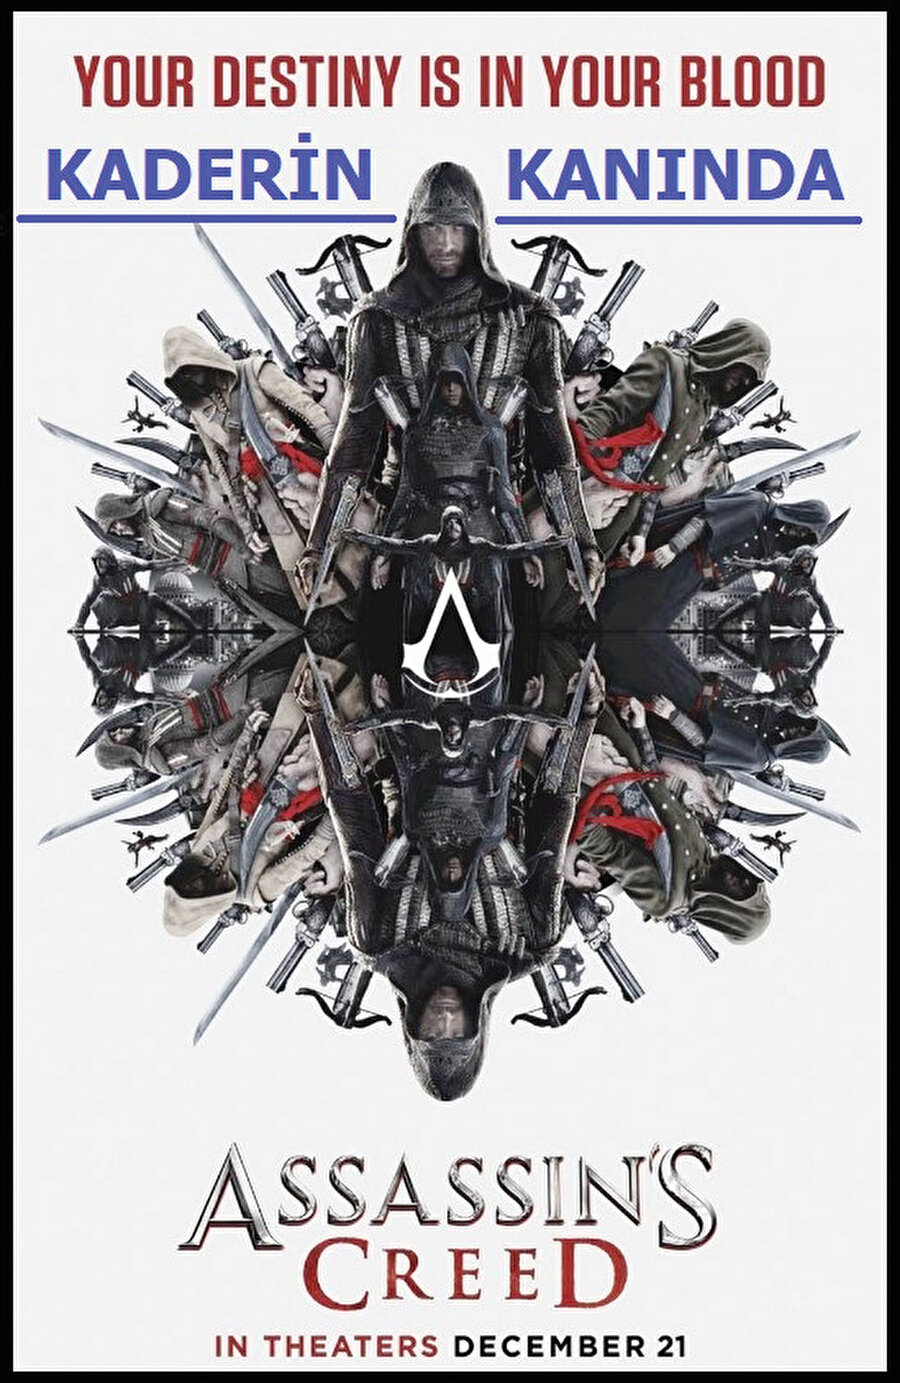 “Assassins Creed”.